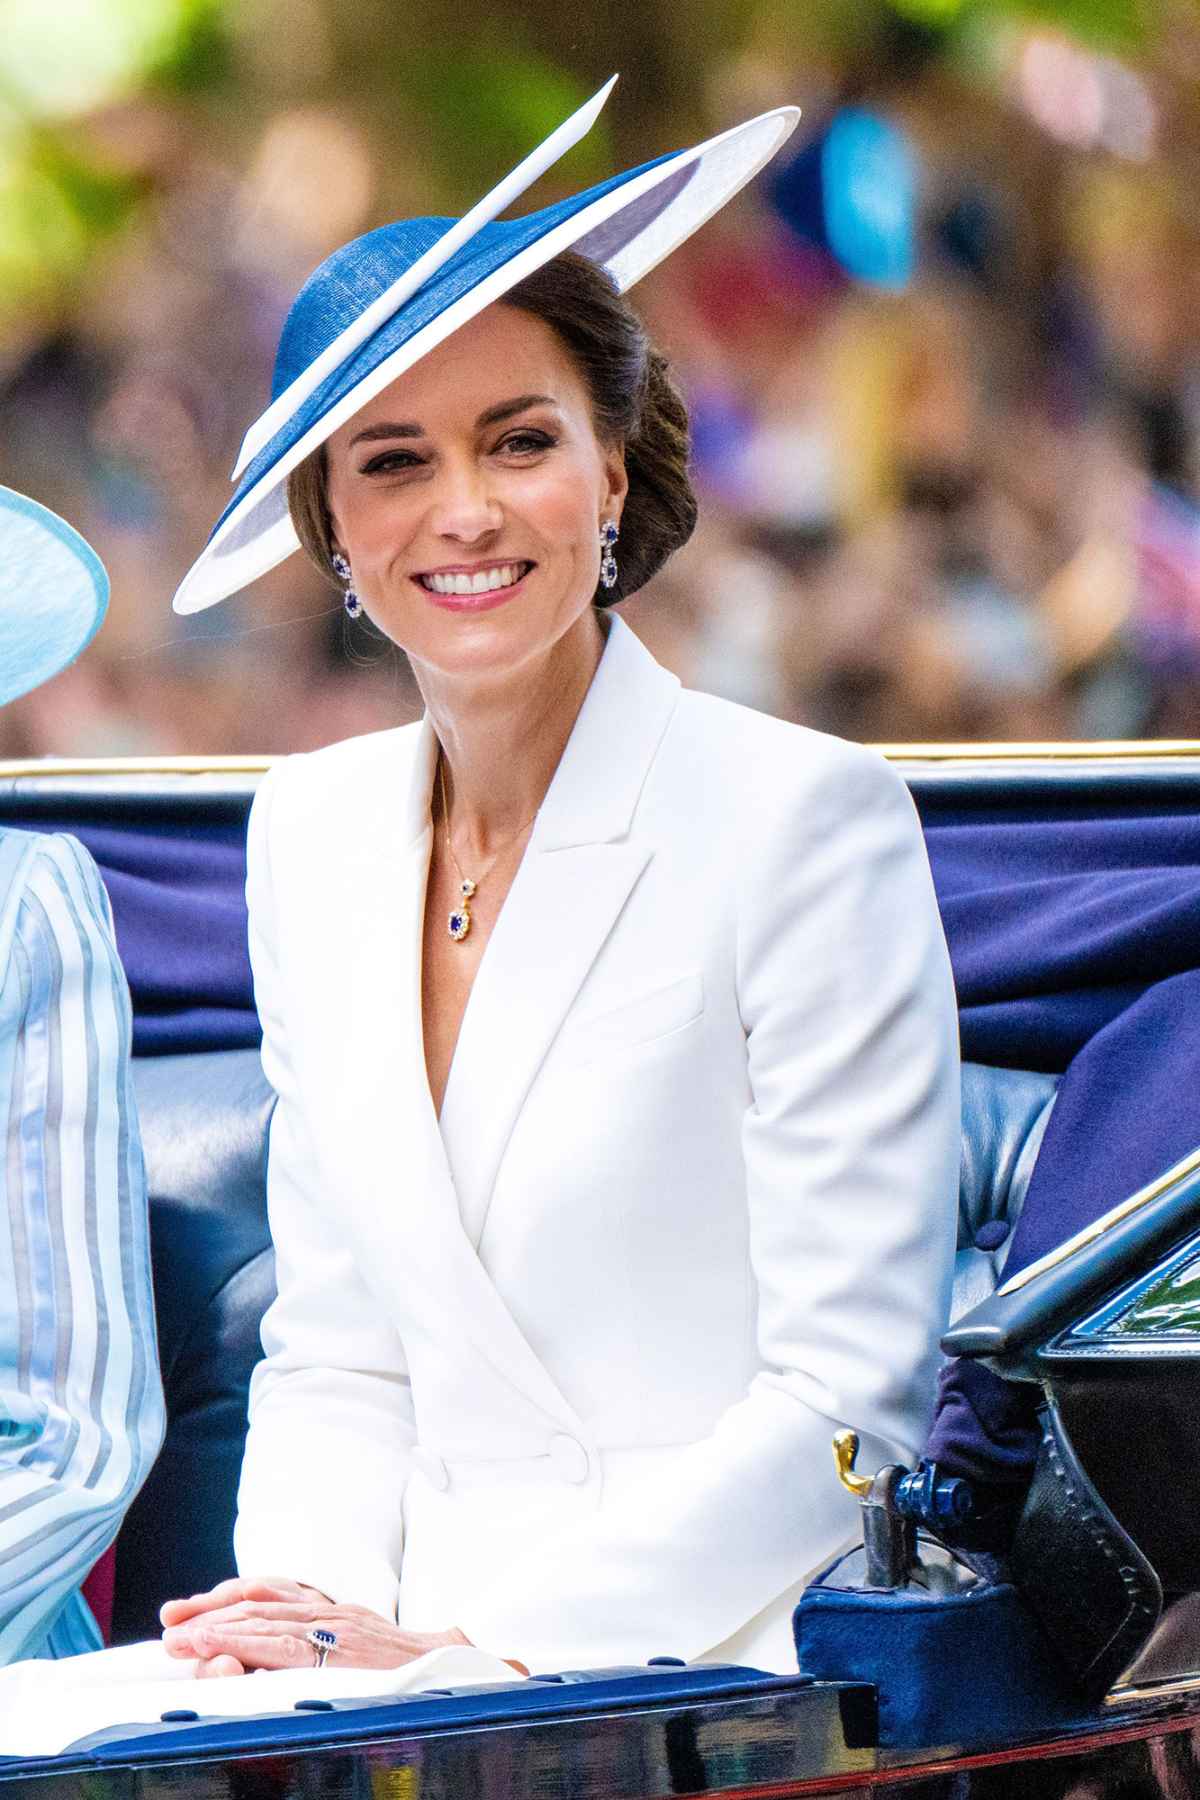 Kate Middleton's Best Fall Fashion Looks: Photos